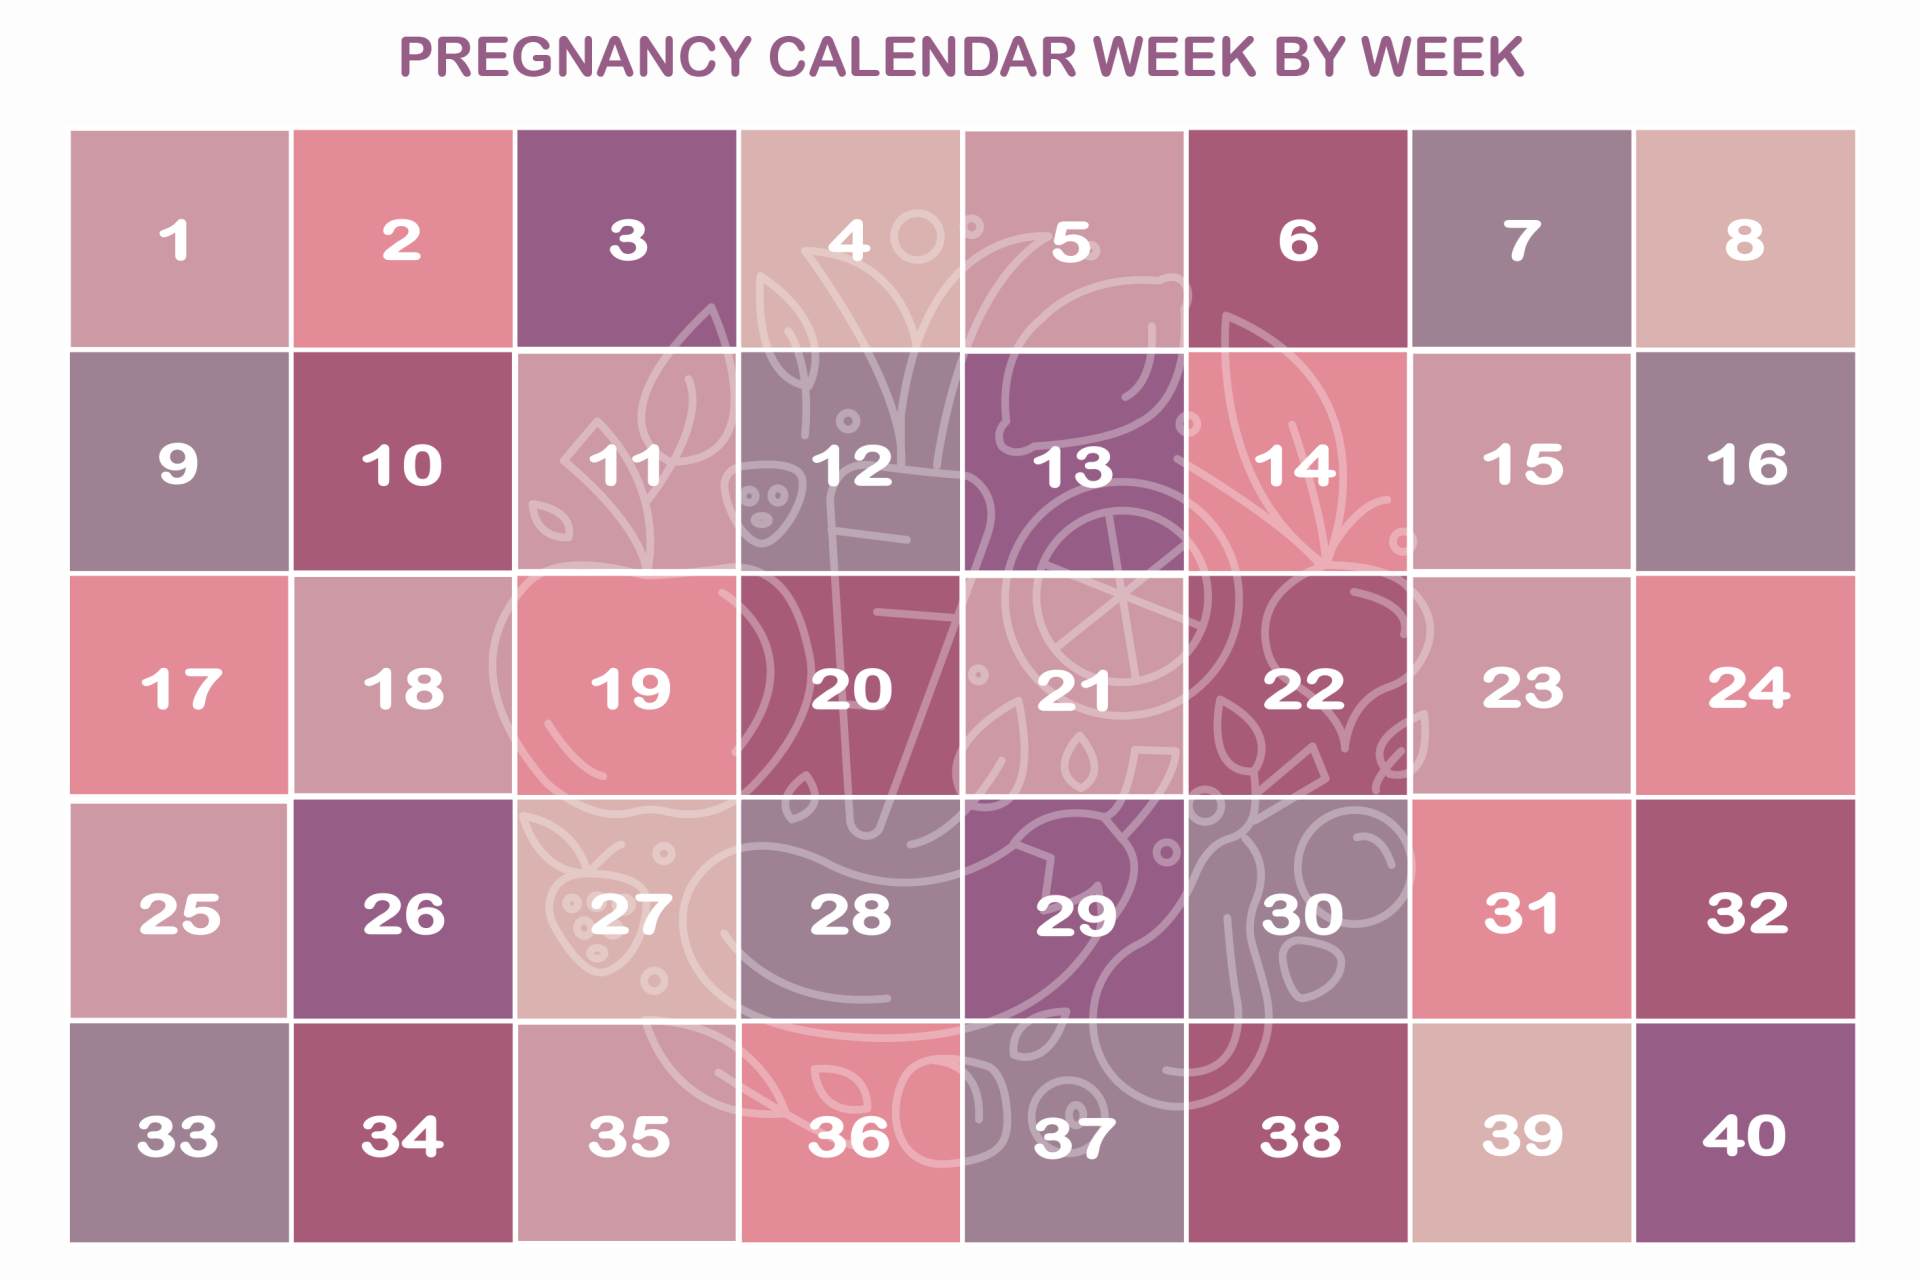 BabyBelly week by week pregnancy calendar with nutrition tips 